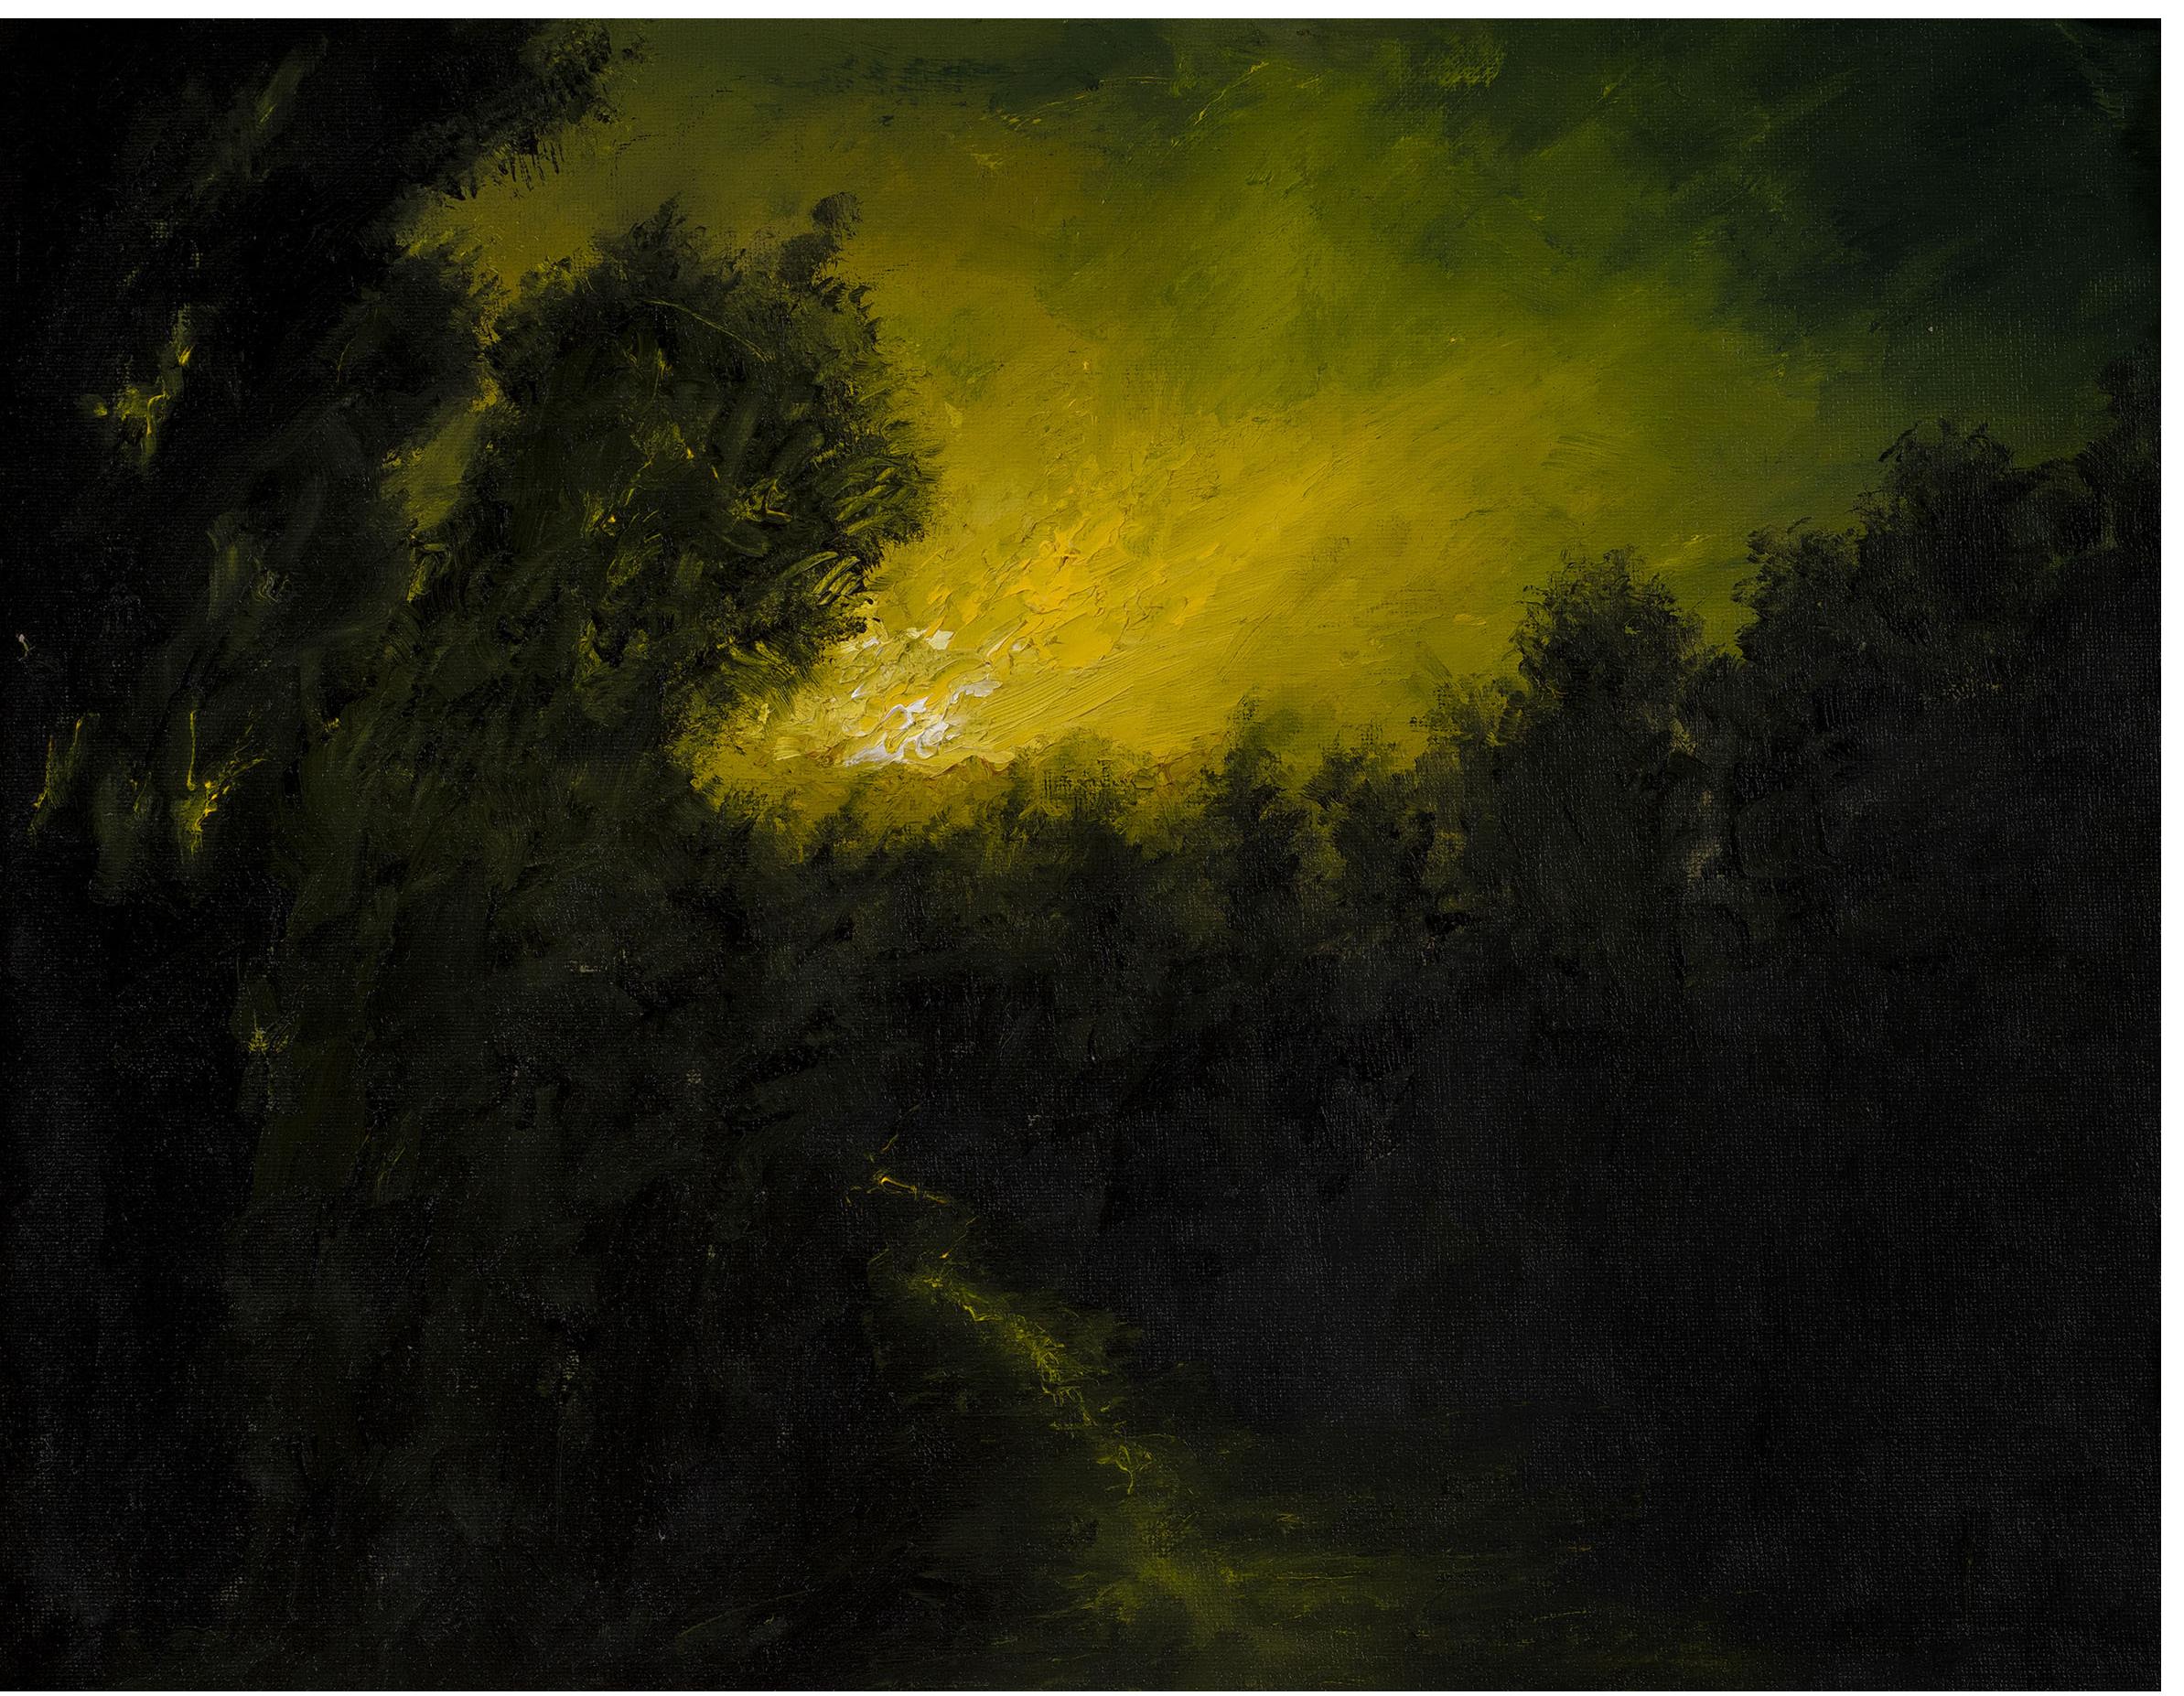 Matthew Bateson - "The Dark Forest 3", oil on canvas board, 40 x 50 cm